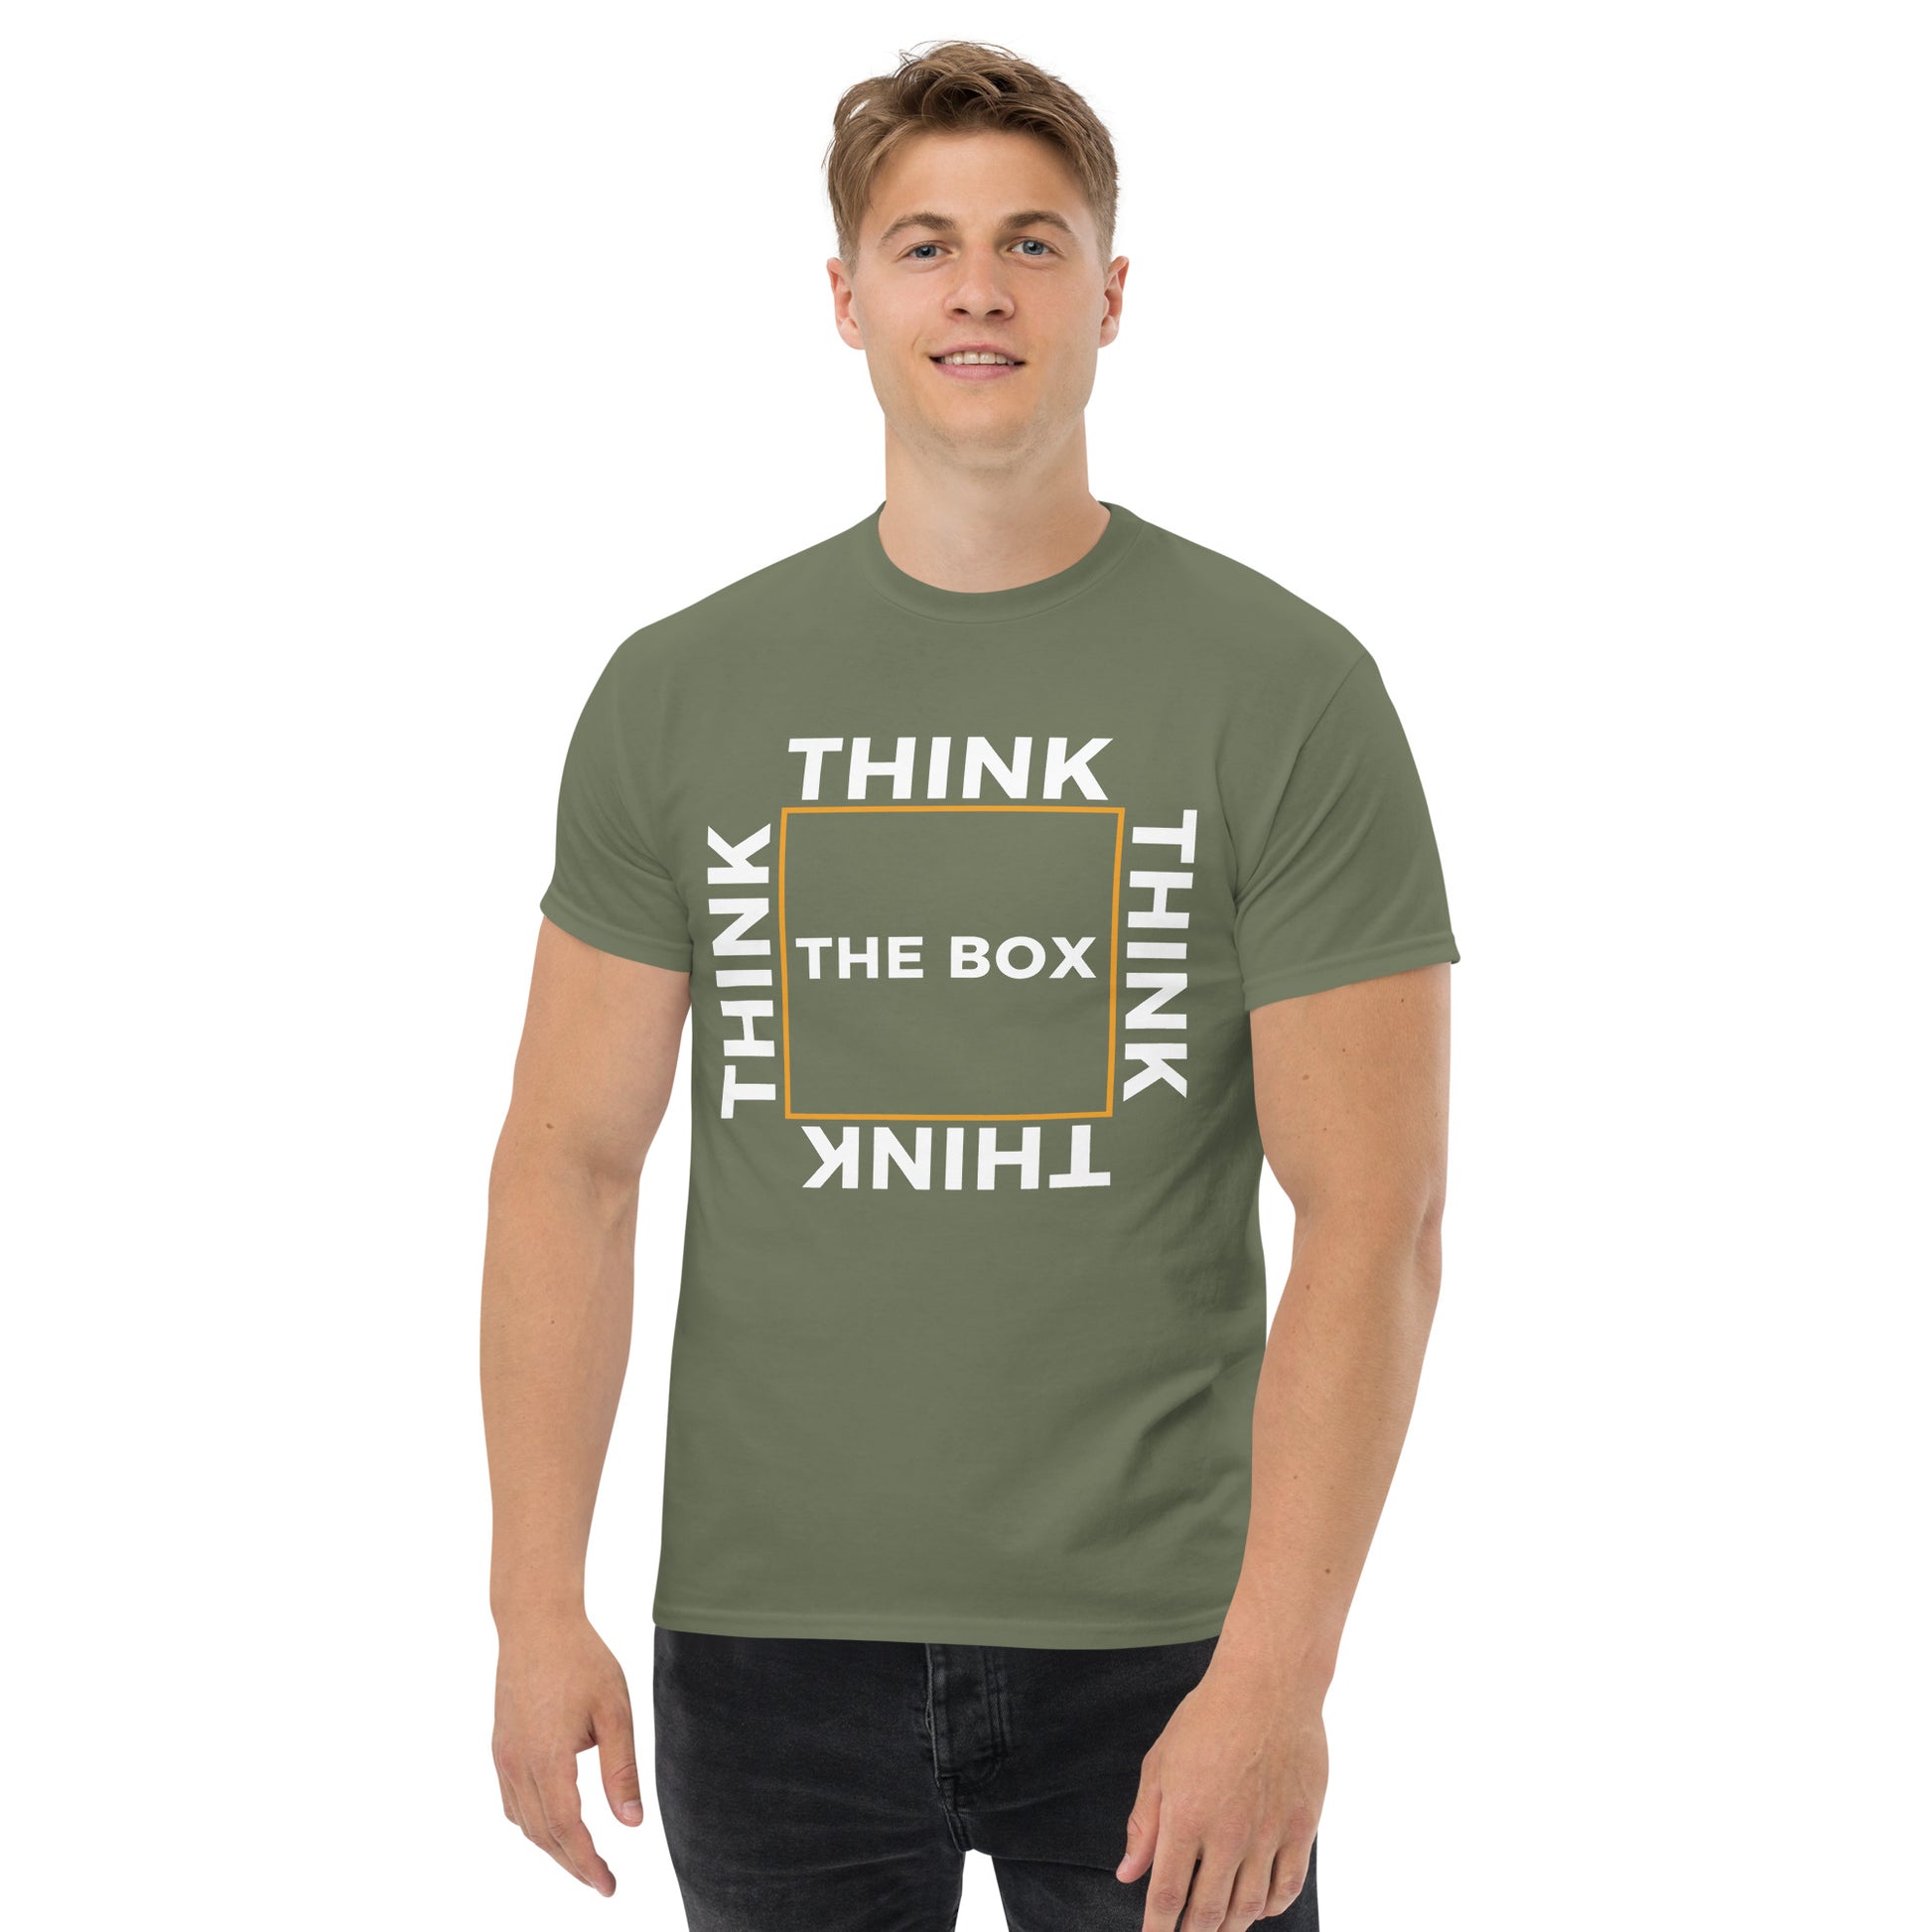 Think Outside the Box men's classic tee P# 00083 - Vulgar Tees